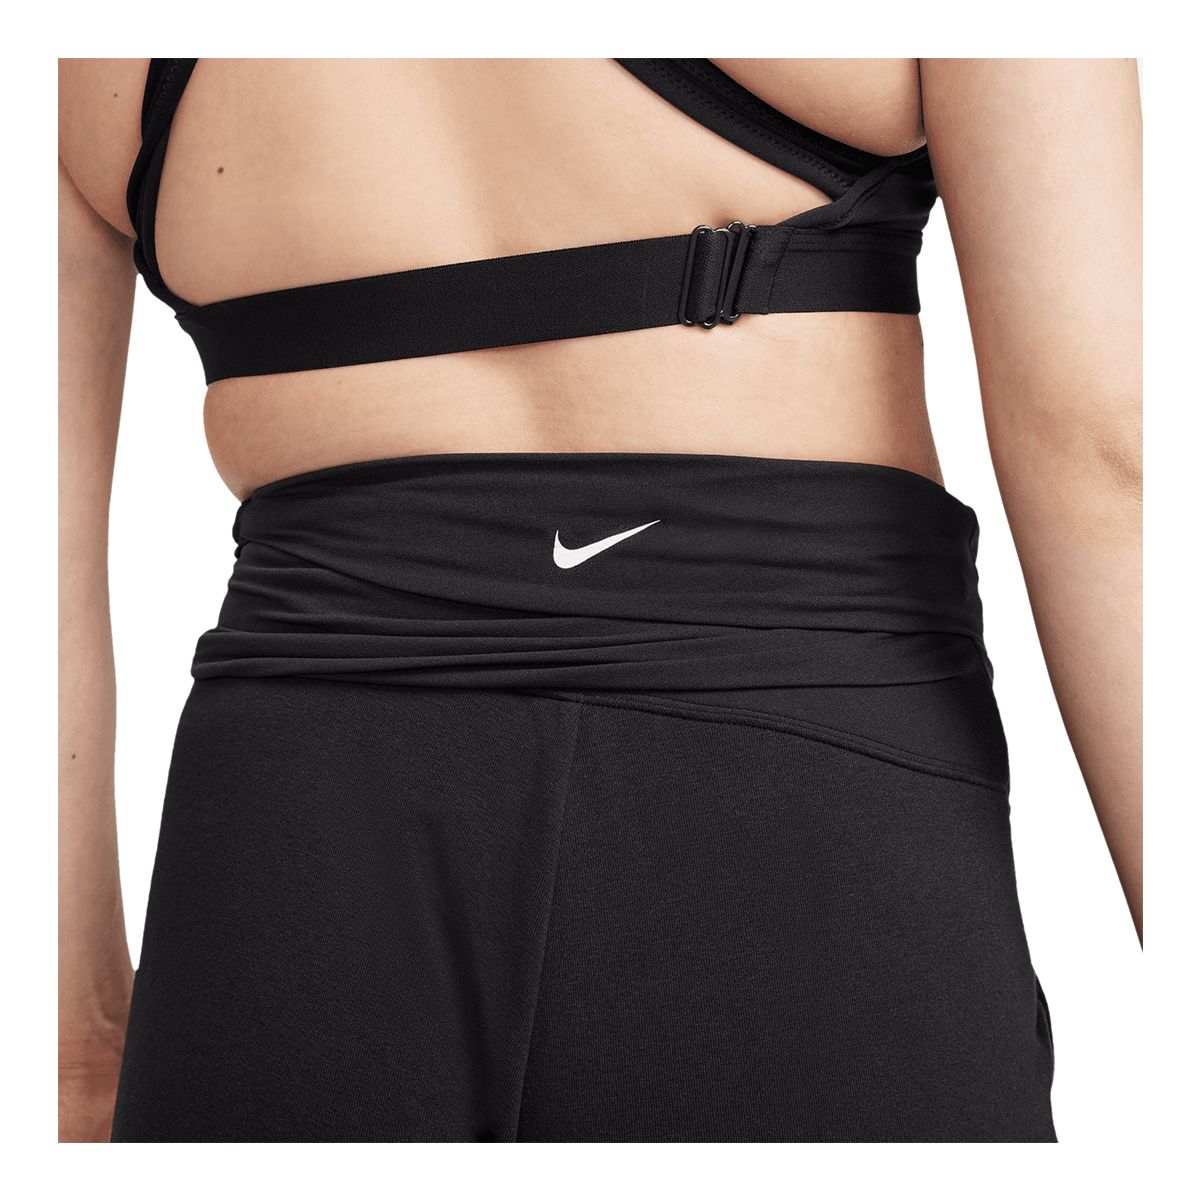 Nike Women's Maternity One Dri-FIT Pants